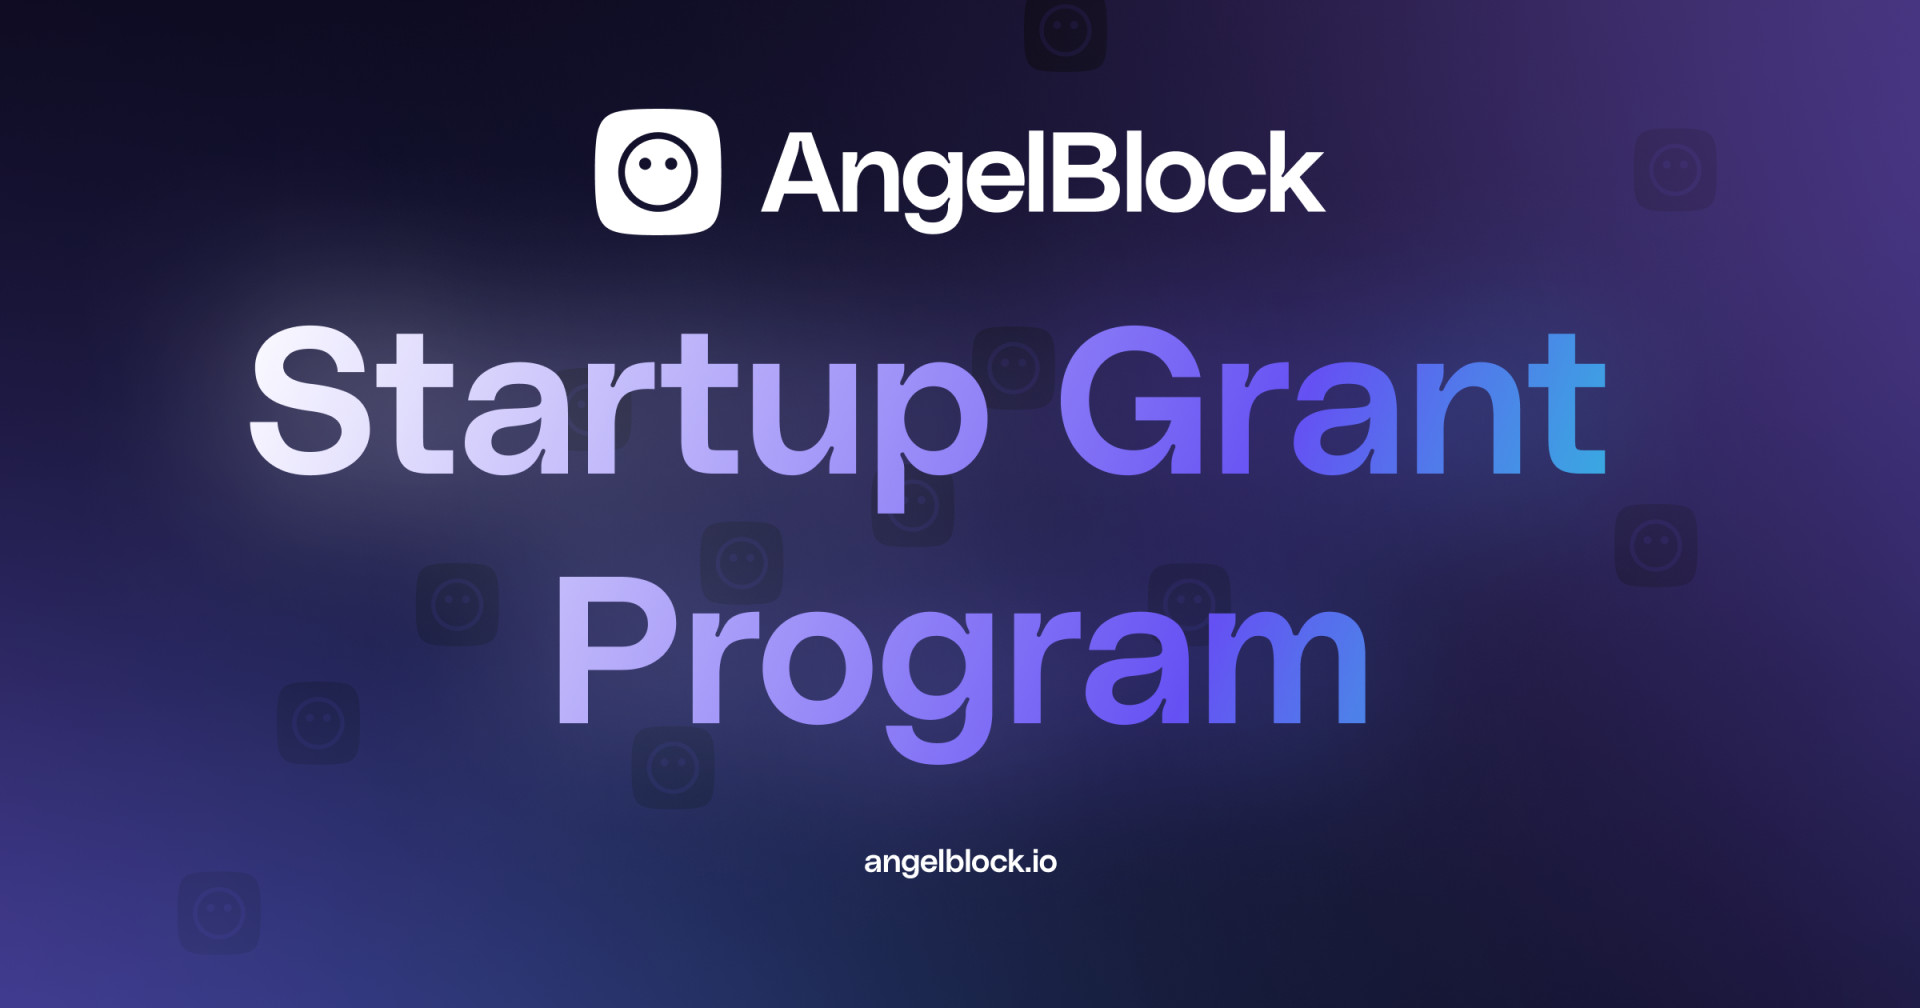  angelblock platform startup grant program launch protocol 